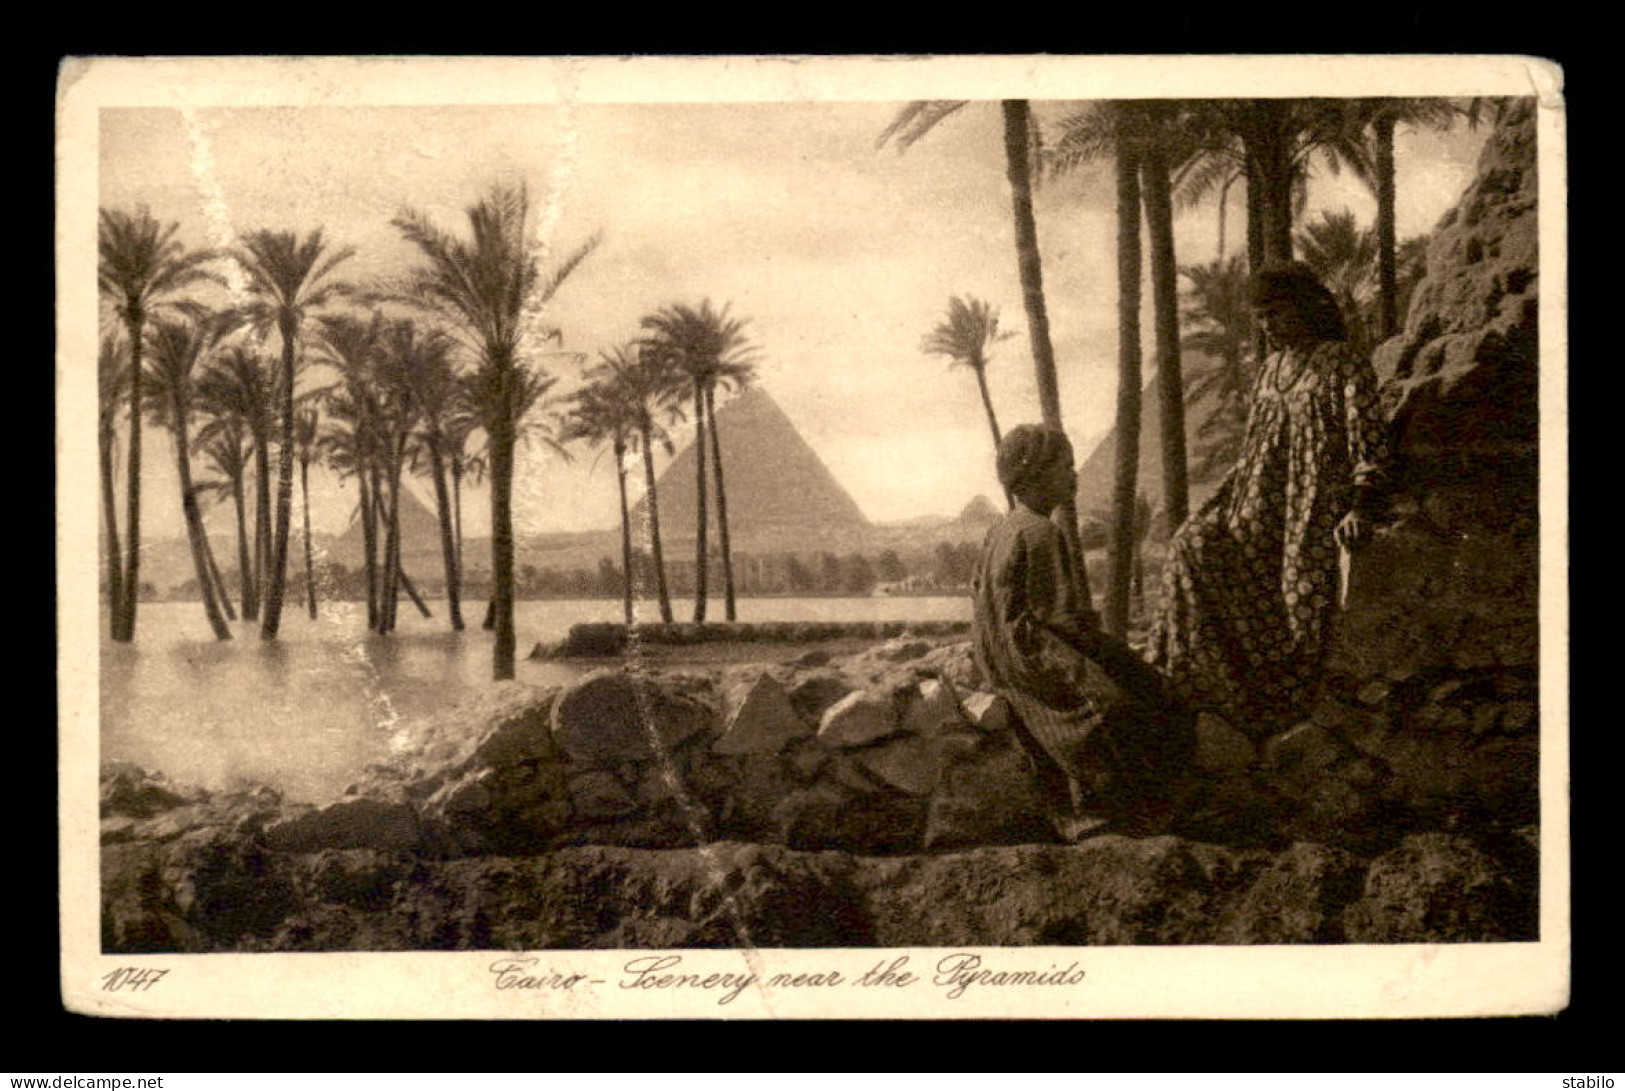 EGYPTE - LENHERT & LANDROCK N°1047 - CAIRO - THE PYRAMIDS - Kairo